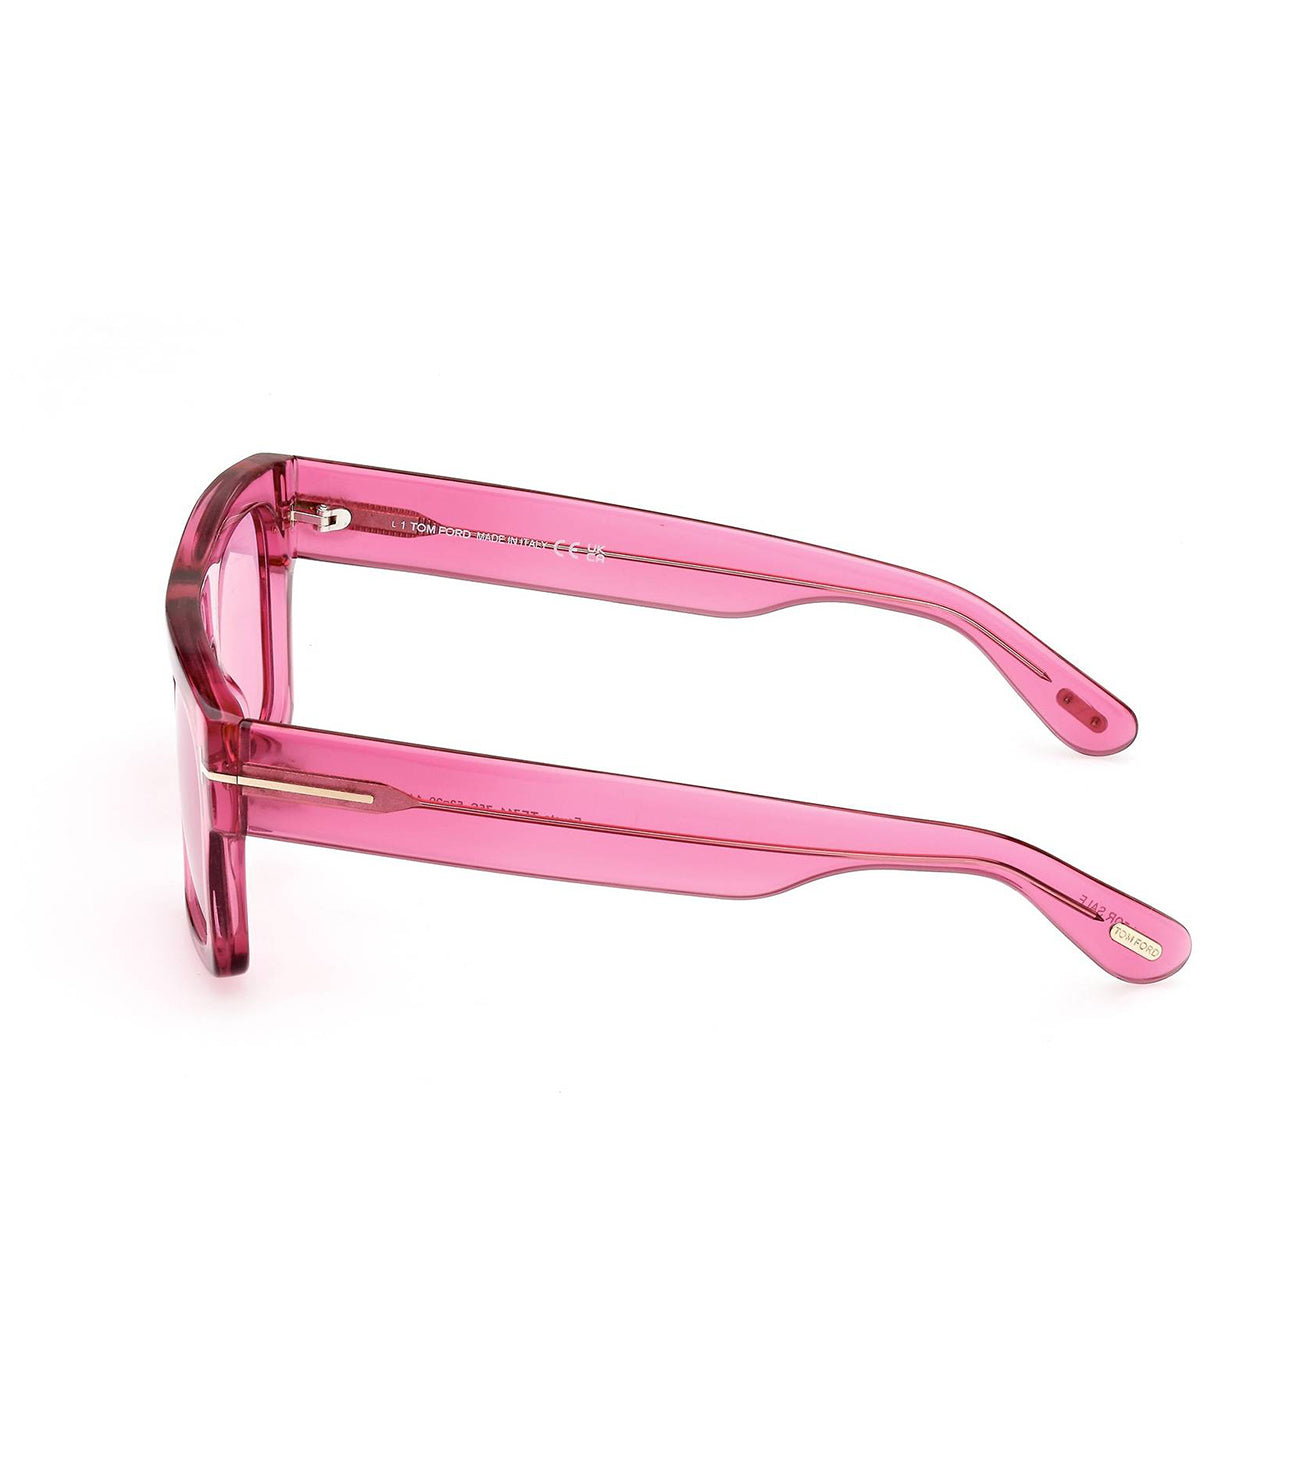 Tom Ford Unisex Pink Wayfarer Sunglasses